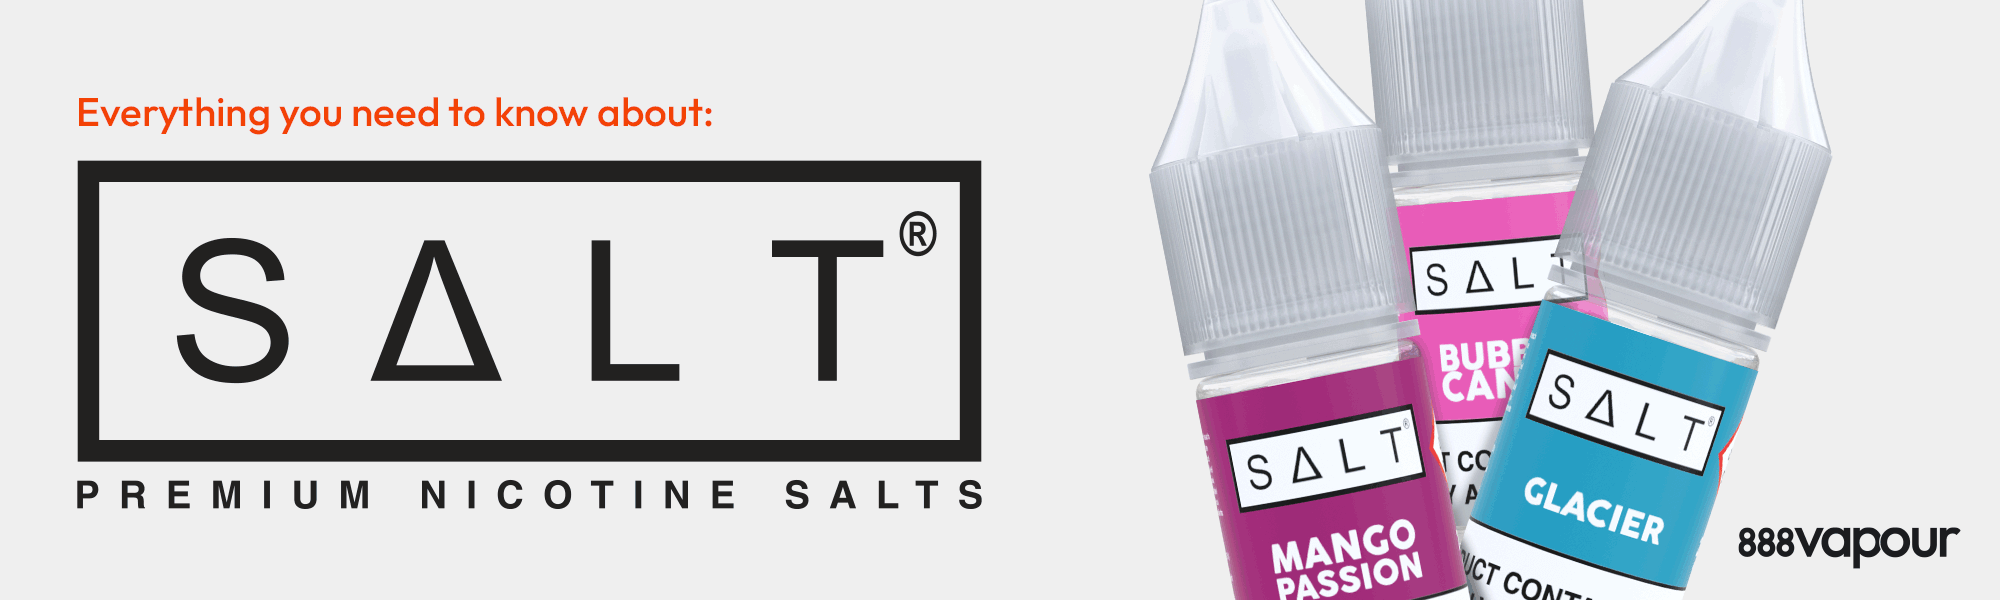 SALT - Why choose SALT Nicotine Salts?